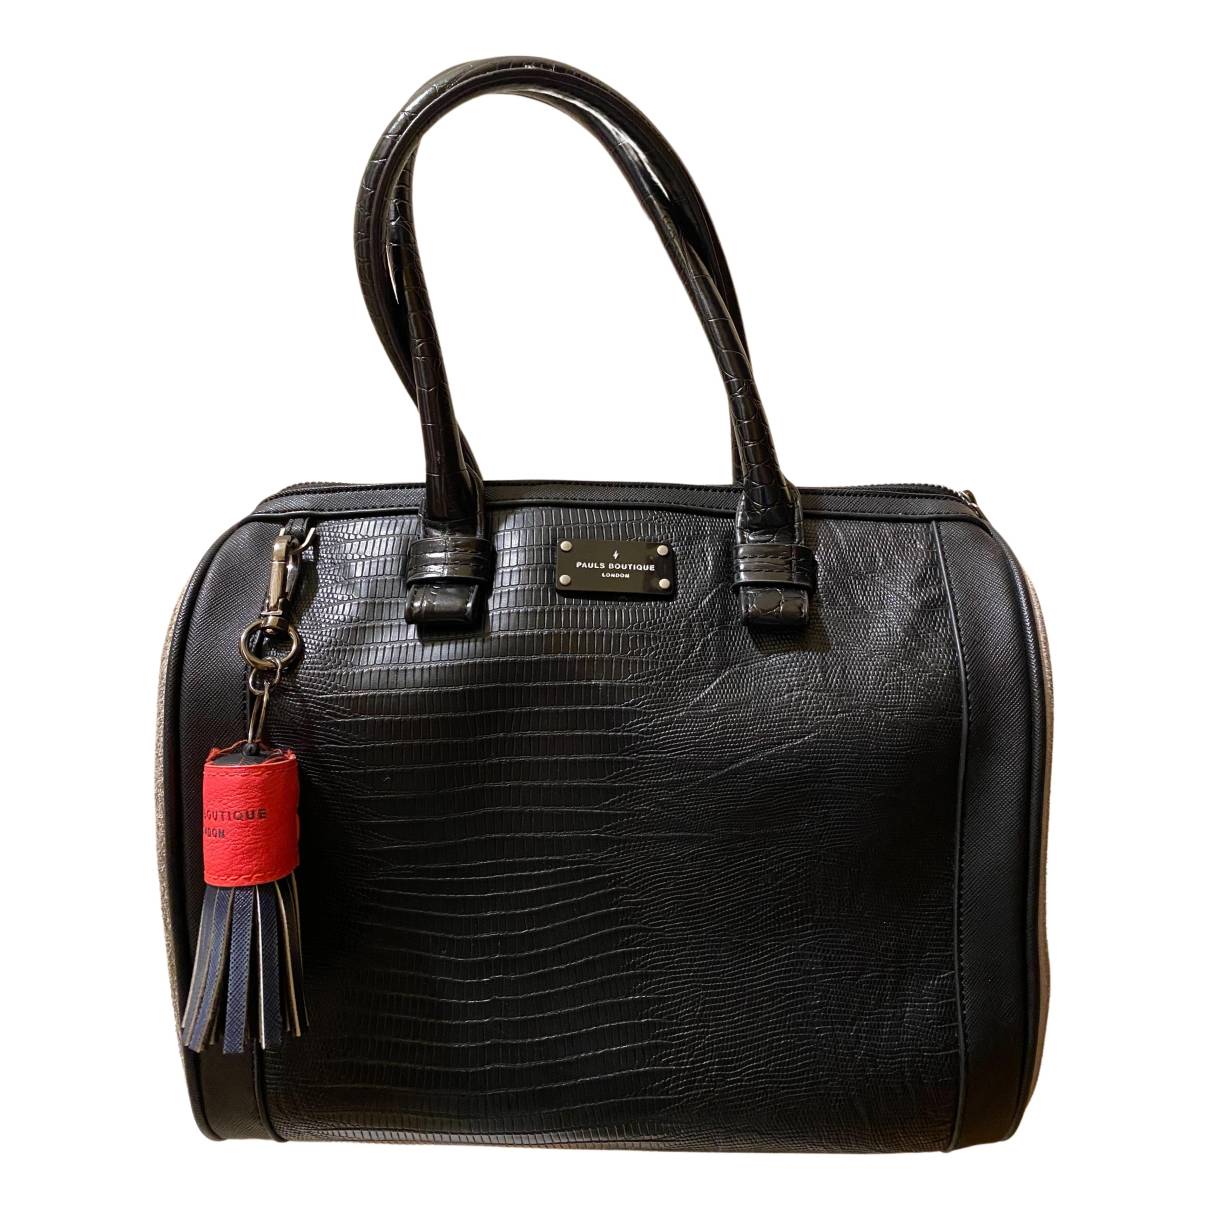 Best Deals for Pauls Boutique Handbags